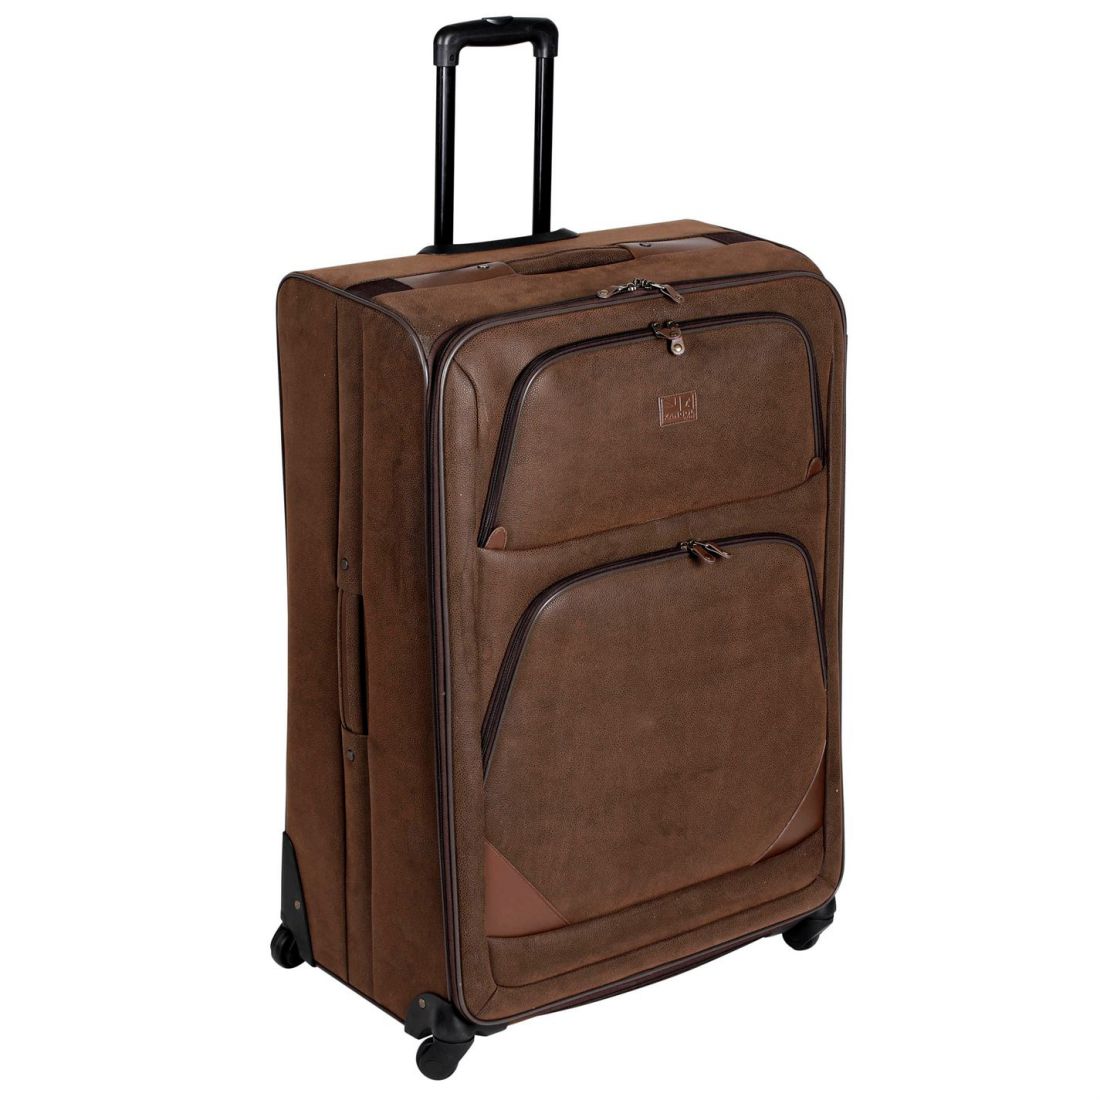 Kangol 4 Wheel Suitcase Extending Handle Luggage Travel Accessories | eBay